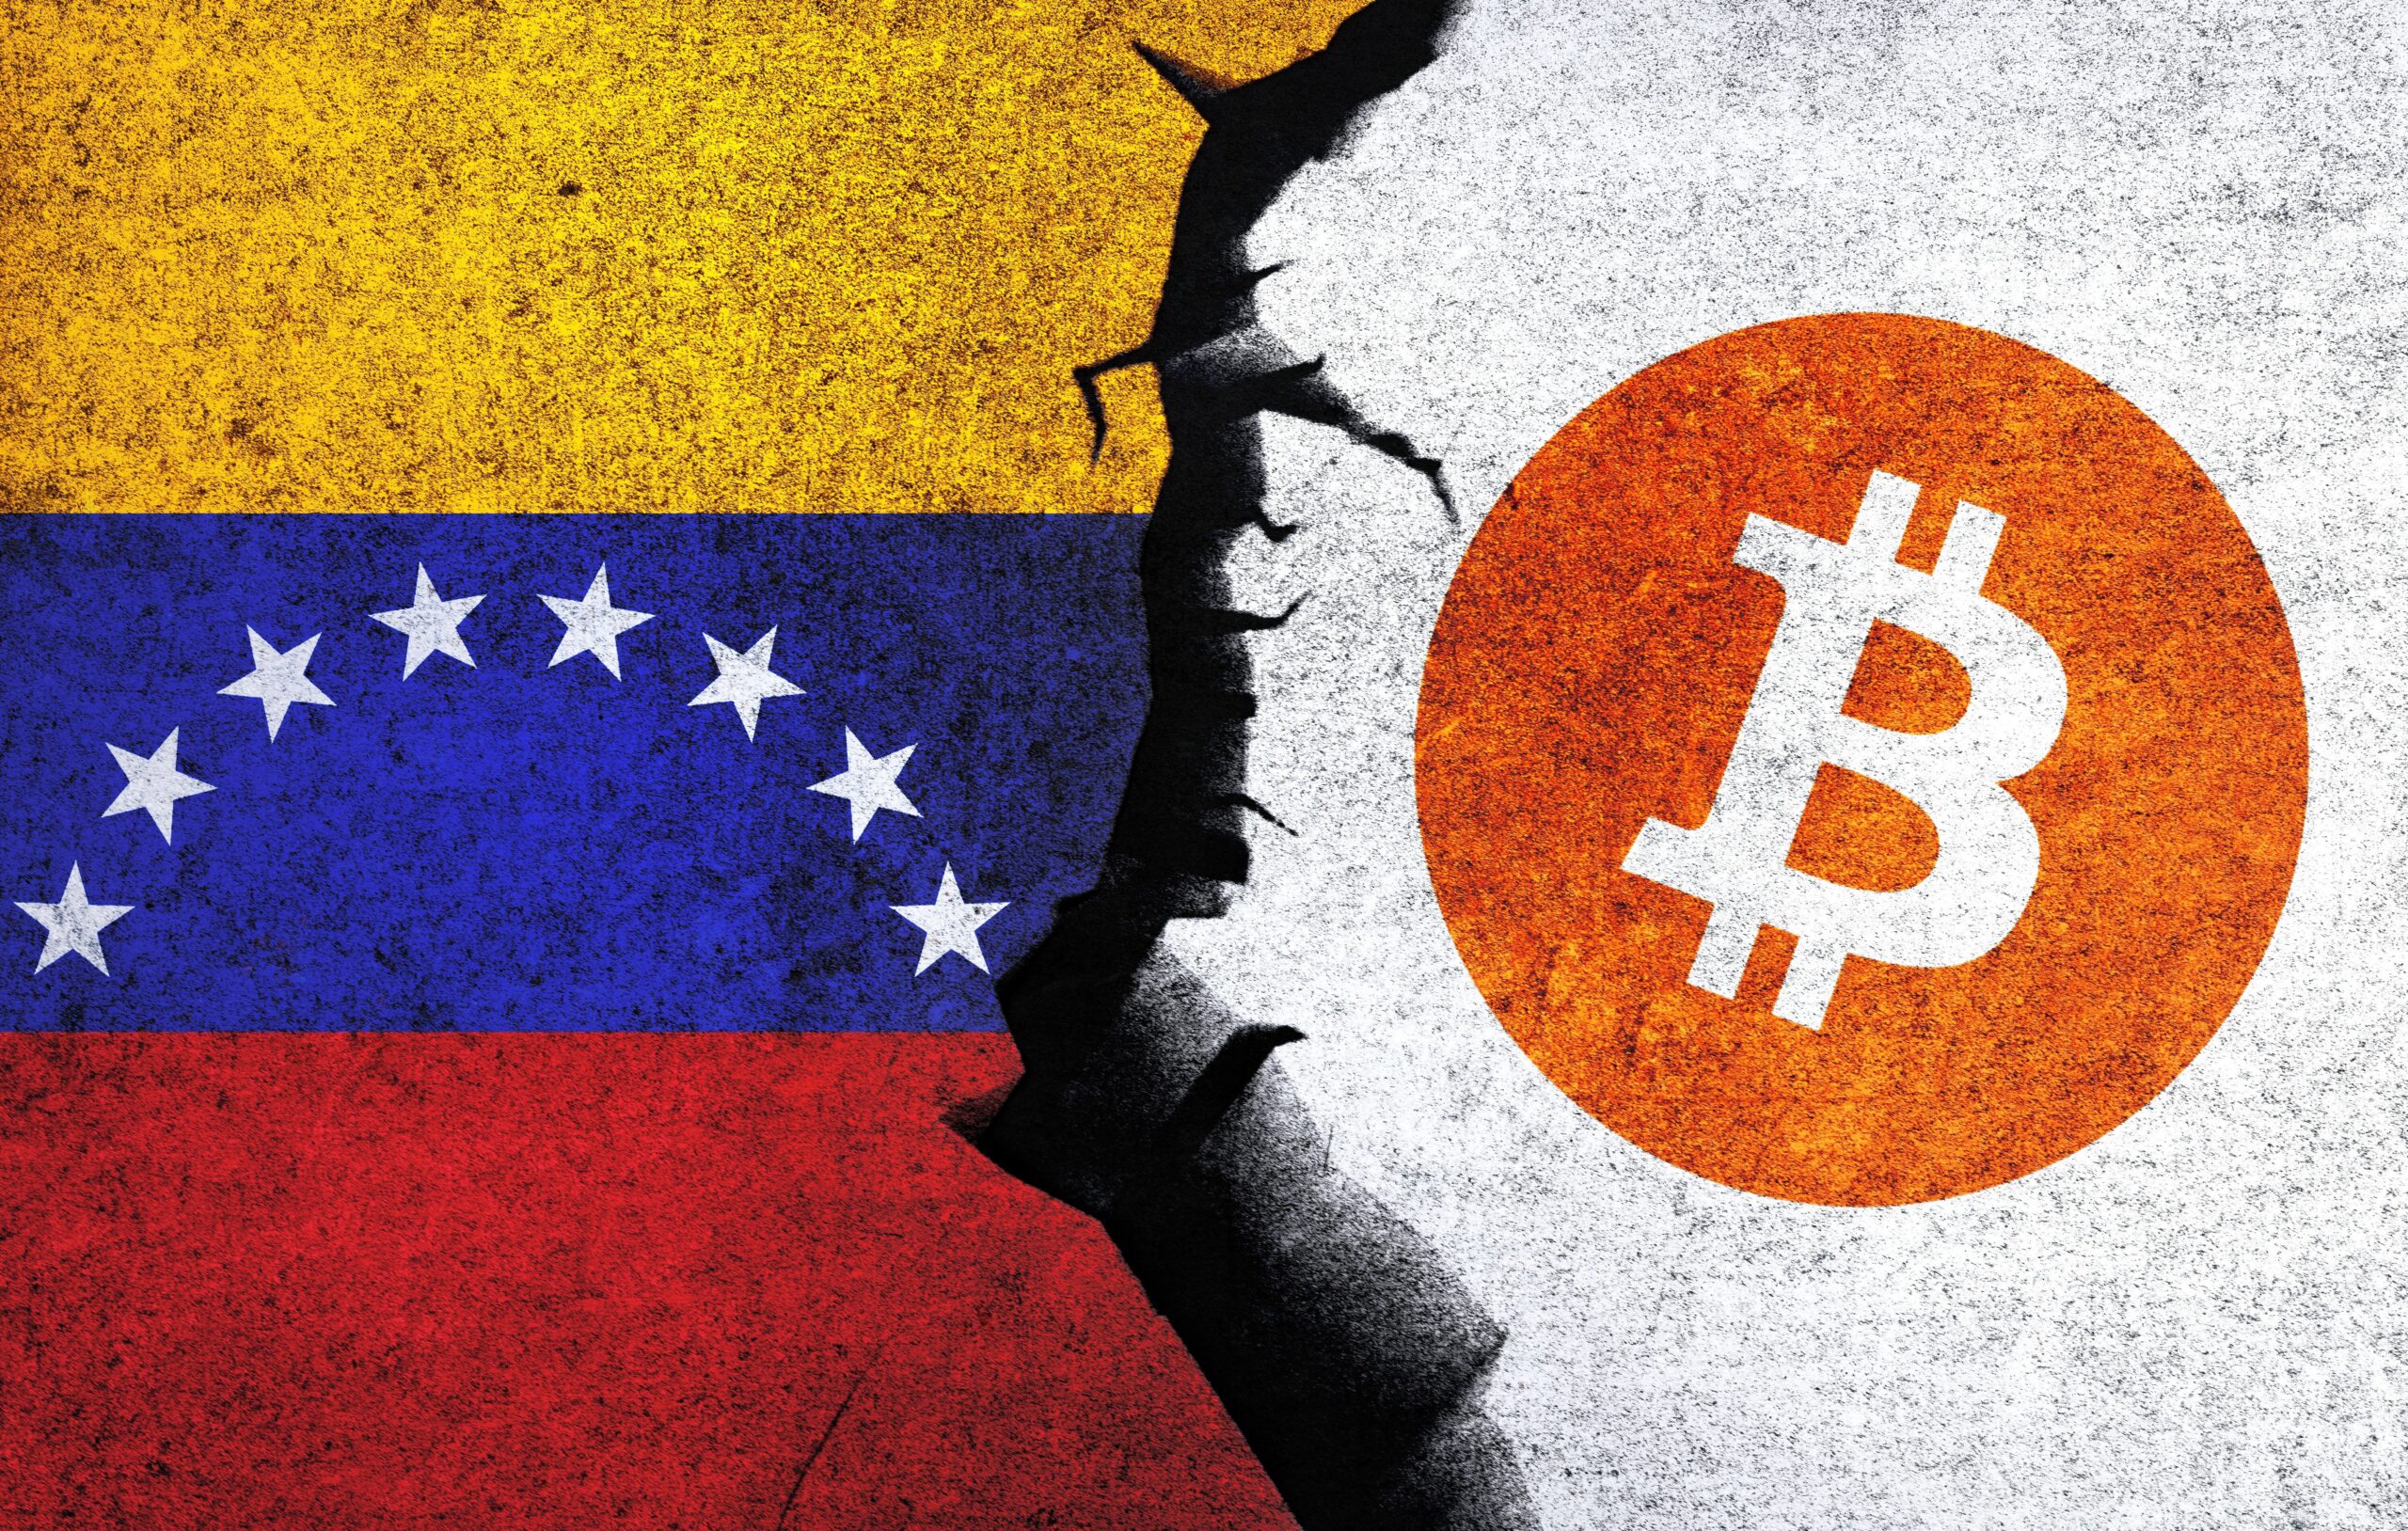 Venezuela Announces Shutdown of Its National Cryptocurrency Petro